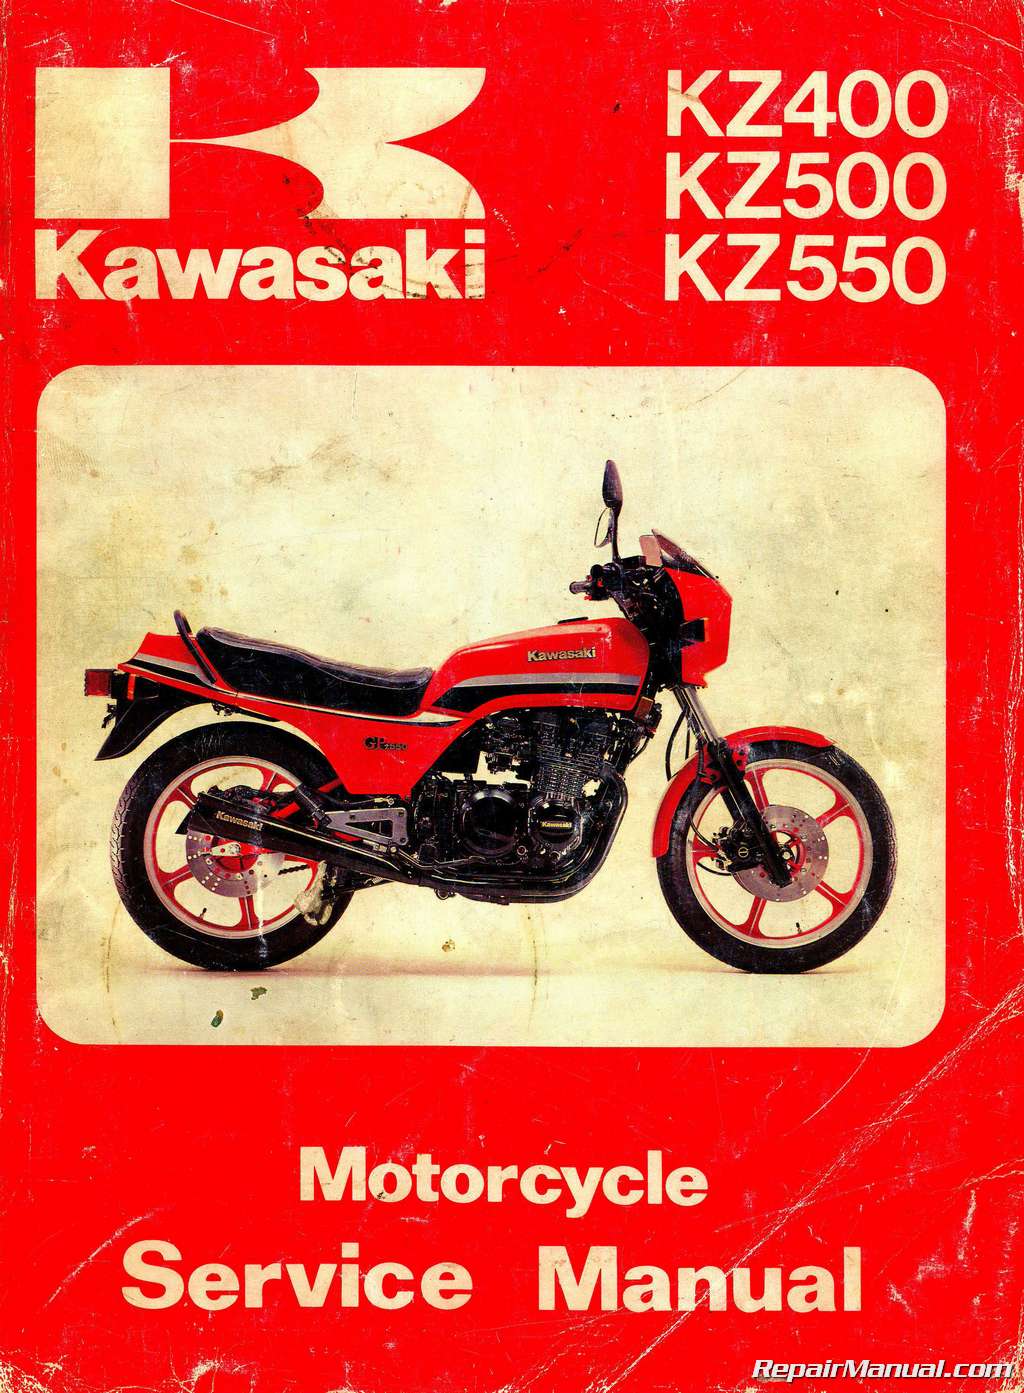 Kawasaki KZ400 KZ500 KZ550 Motorcycle Service Manual